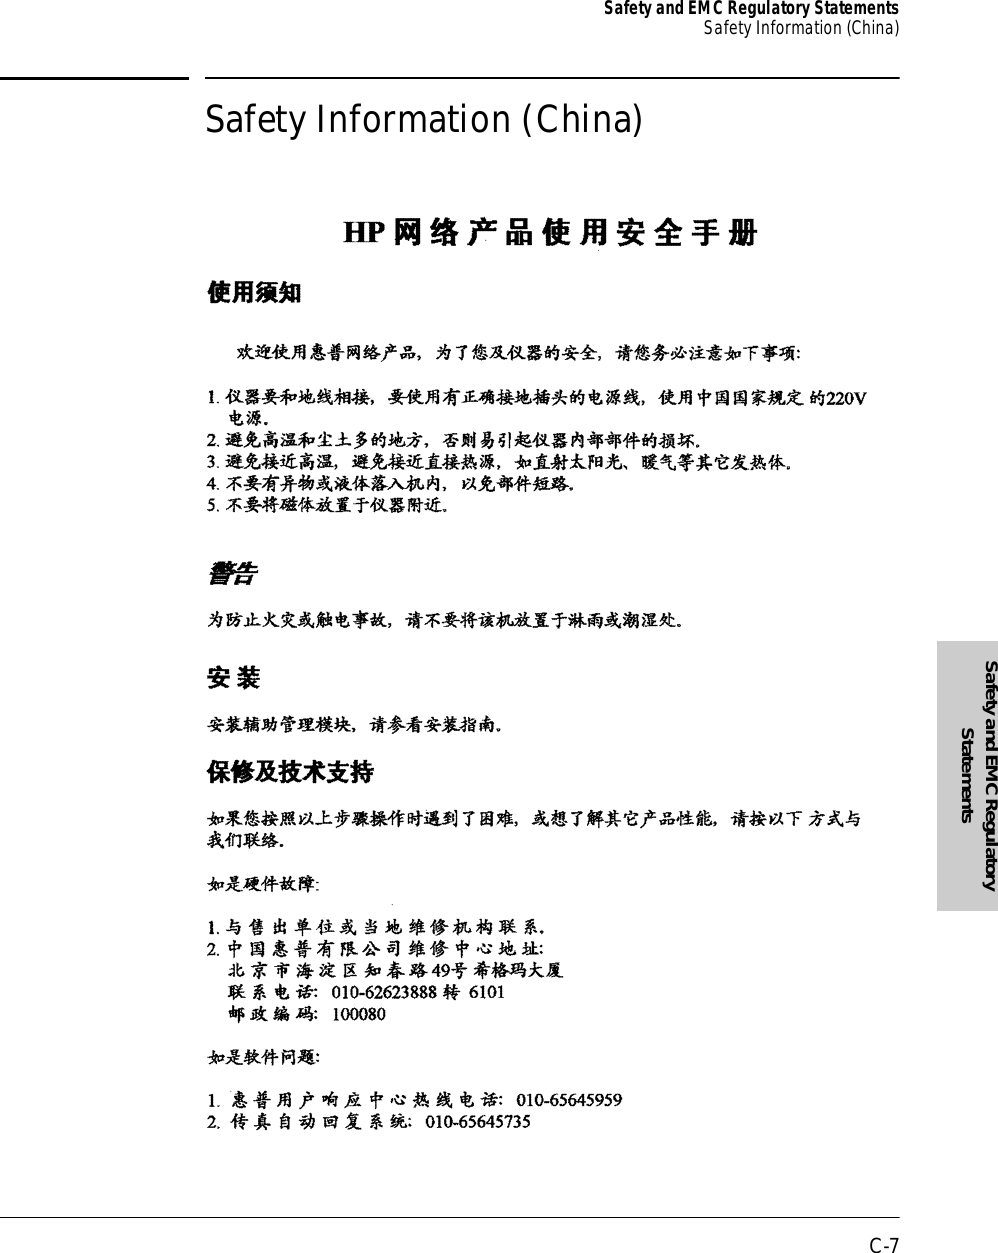 C-7Safety and EMC Regulatory StatementsSafety Information (China)Safety and EMC Regulatory StatementsSafety Information (China)